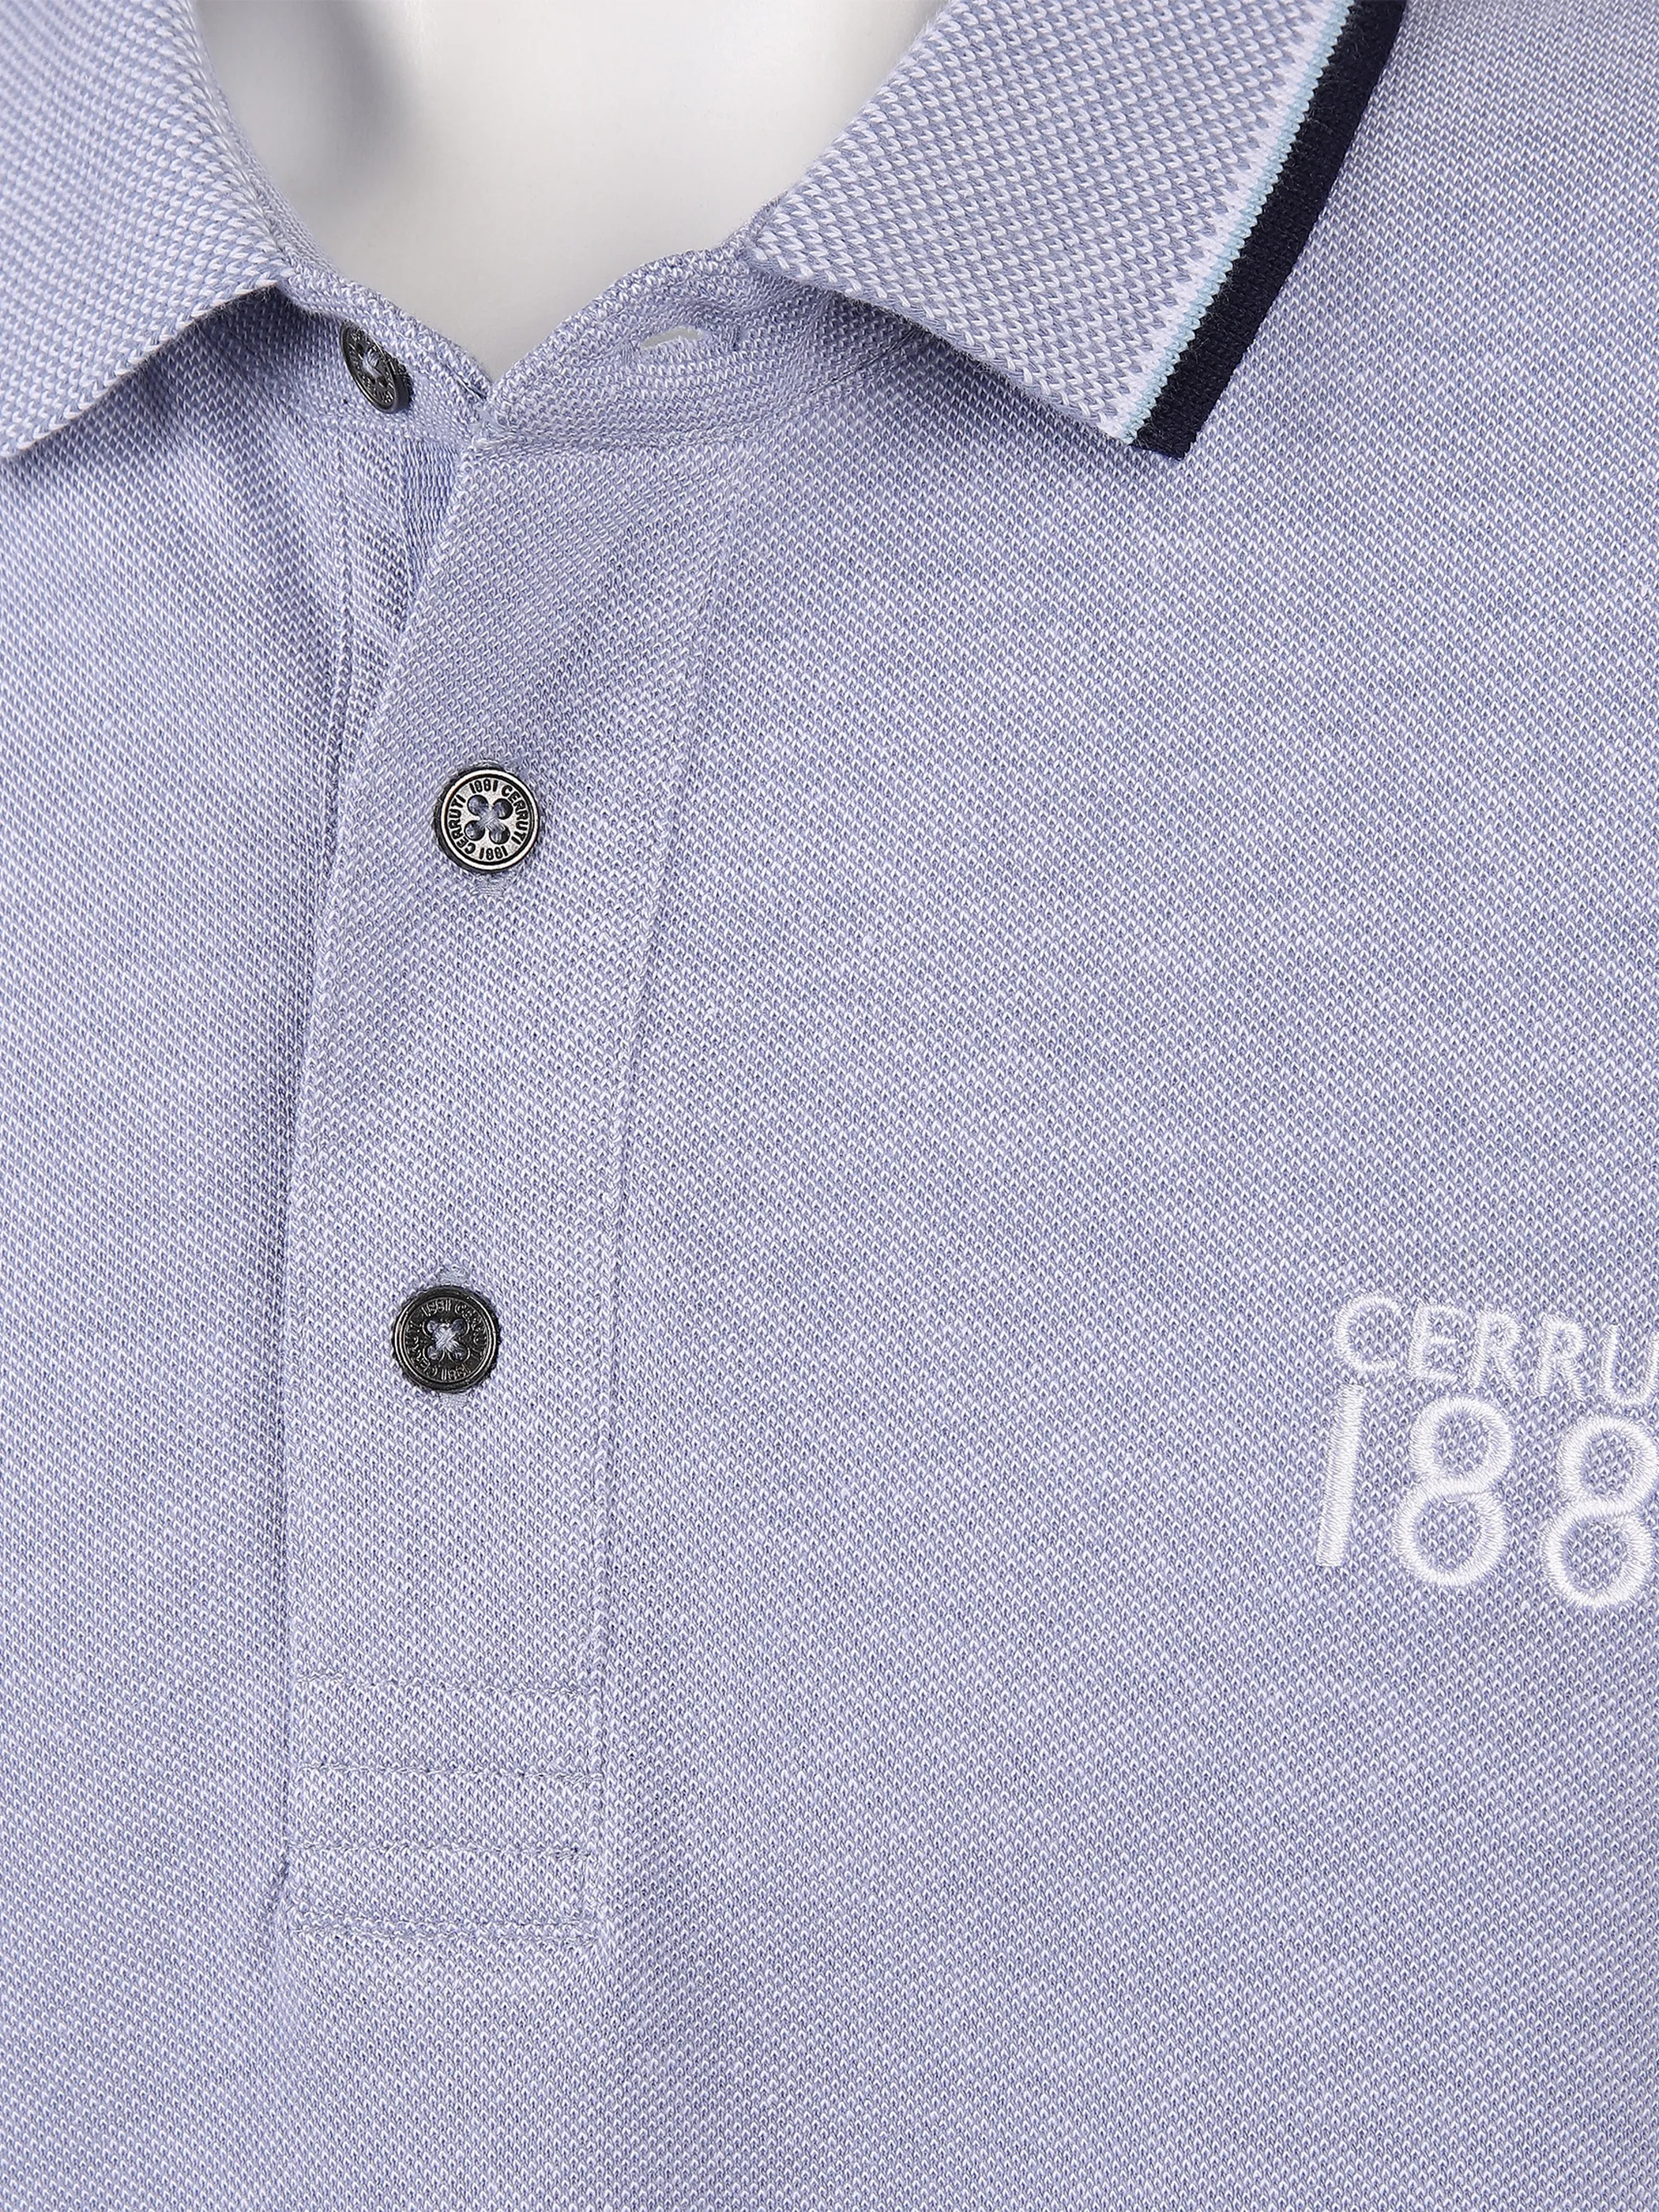 Cerruti 1881 He. Poloshirt 1/2 Arm twisted Grau 834101 GREY BLUE 3